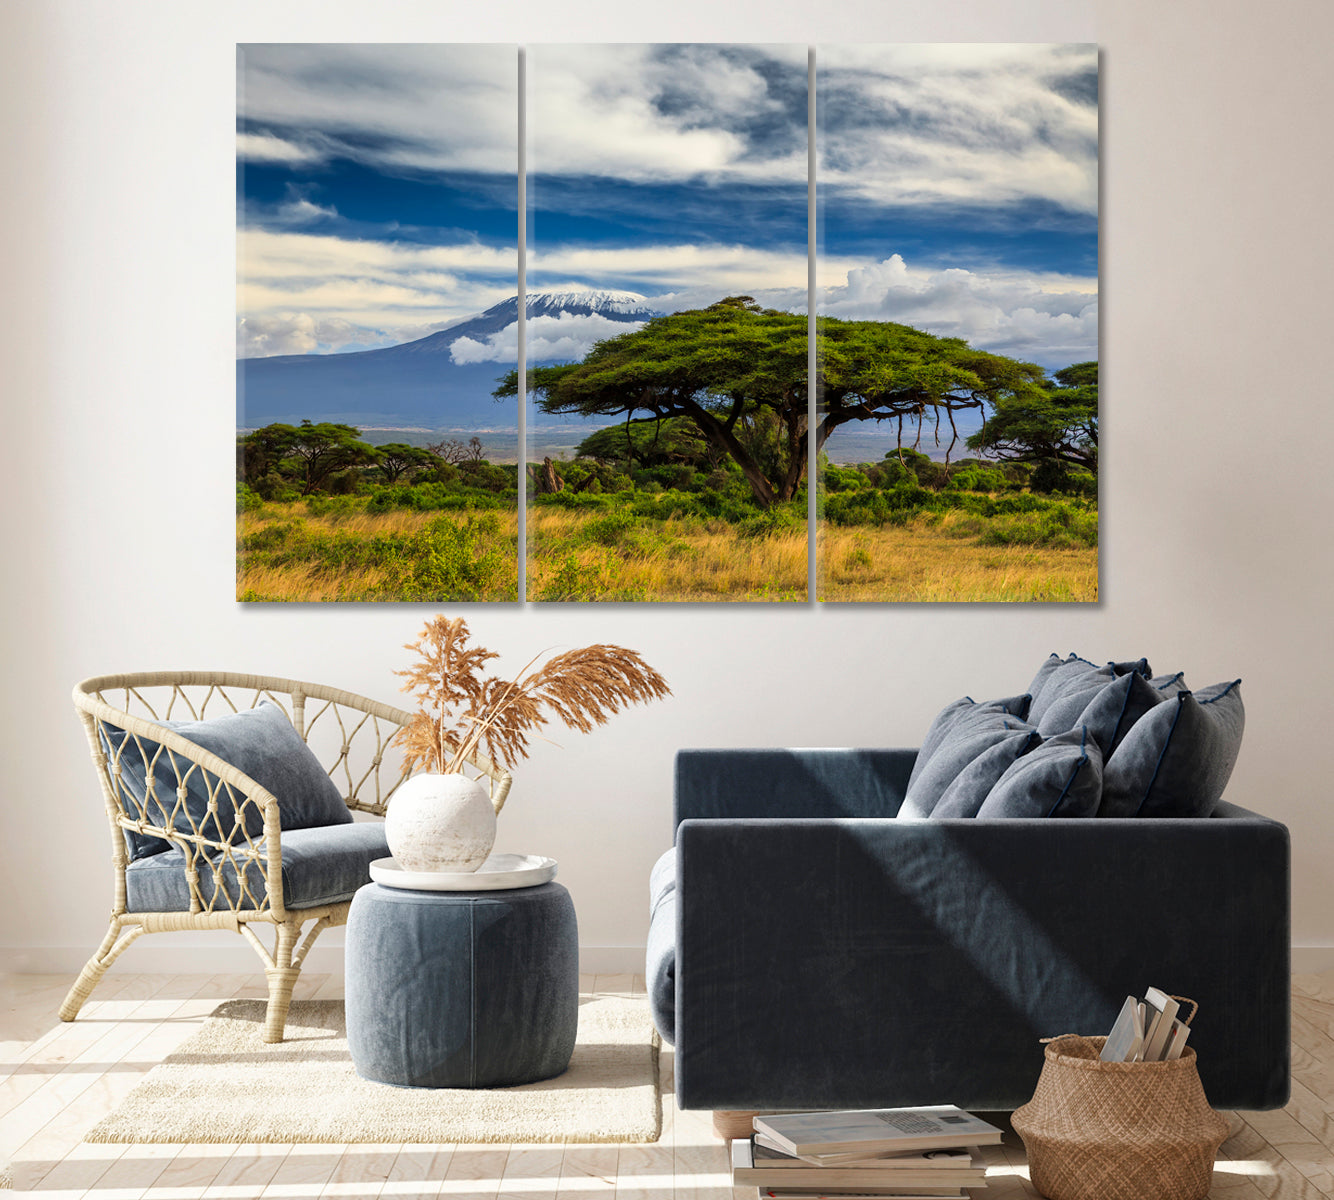 Mount Kilimanjaro Landscape Kenya Africa Canvas Print ArtLexy 3 Panels 36"x24" inches 